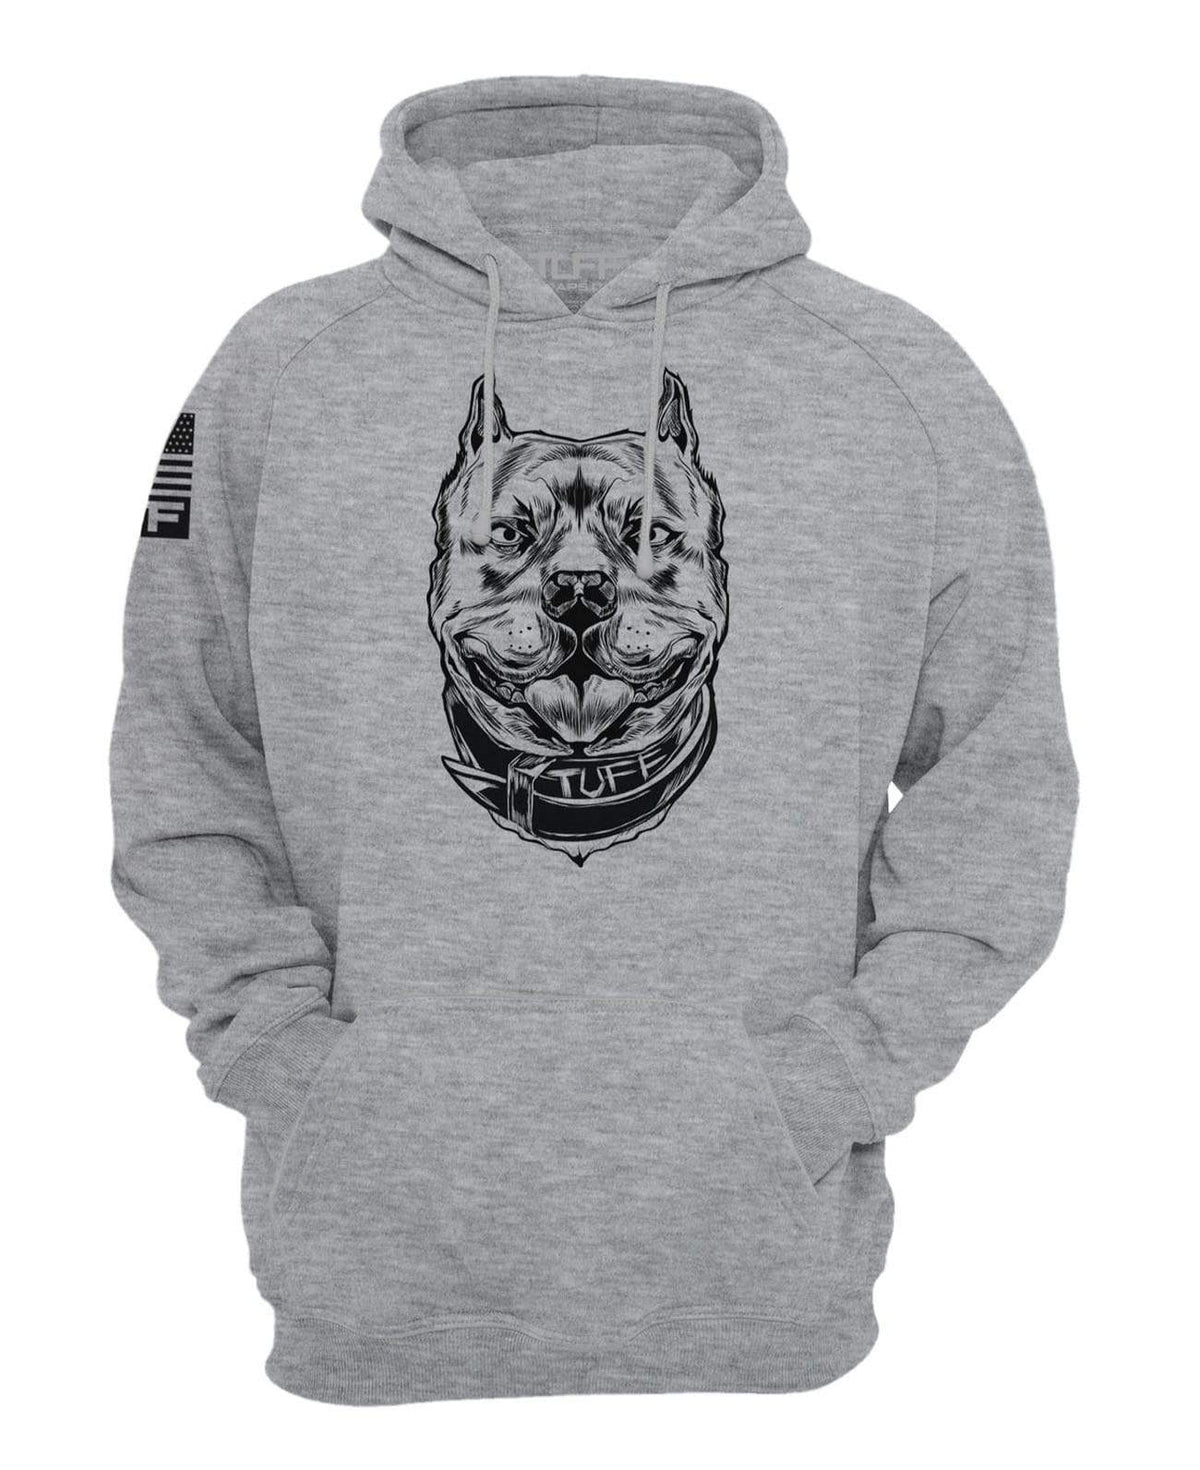 The Pitbull Hooded Sweatshirt XS / Gray TuffWraps.com